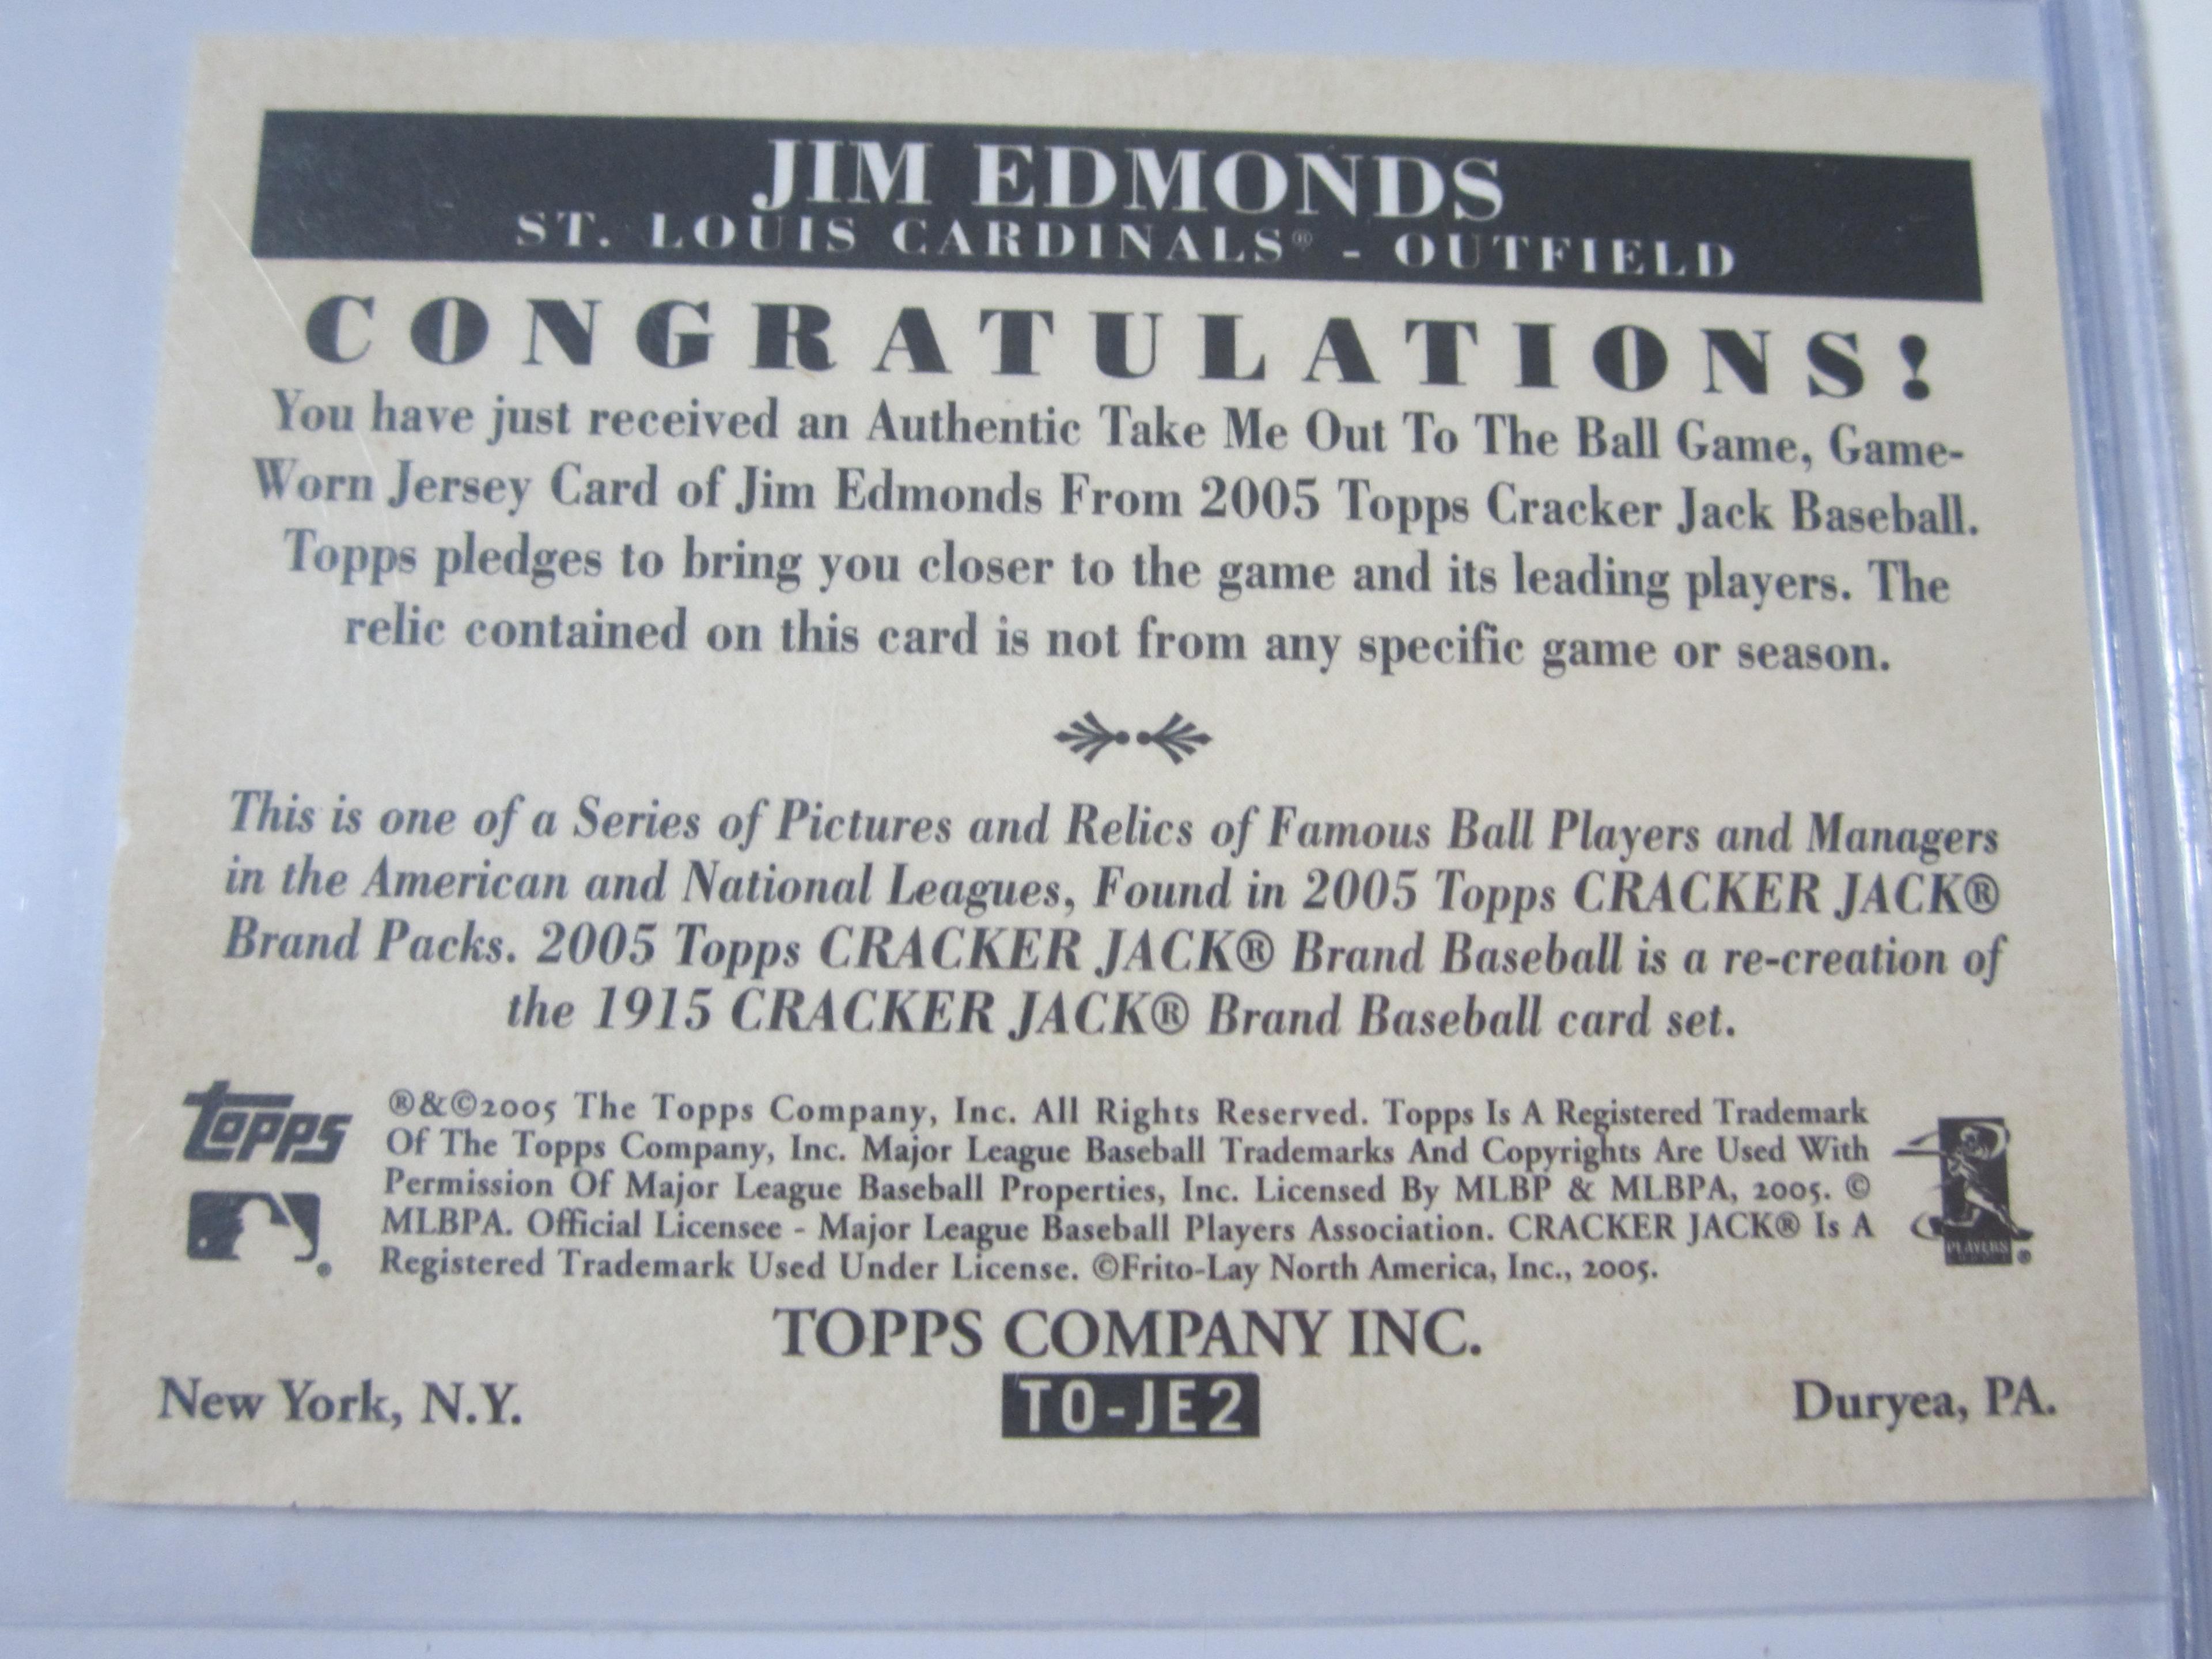 Jim Edmonds St Louis Cardinals Game Used Worn Jersey Card SP